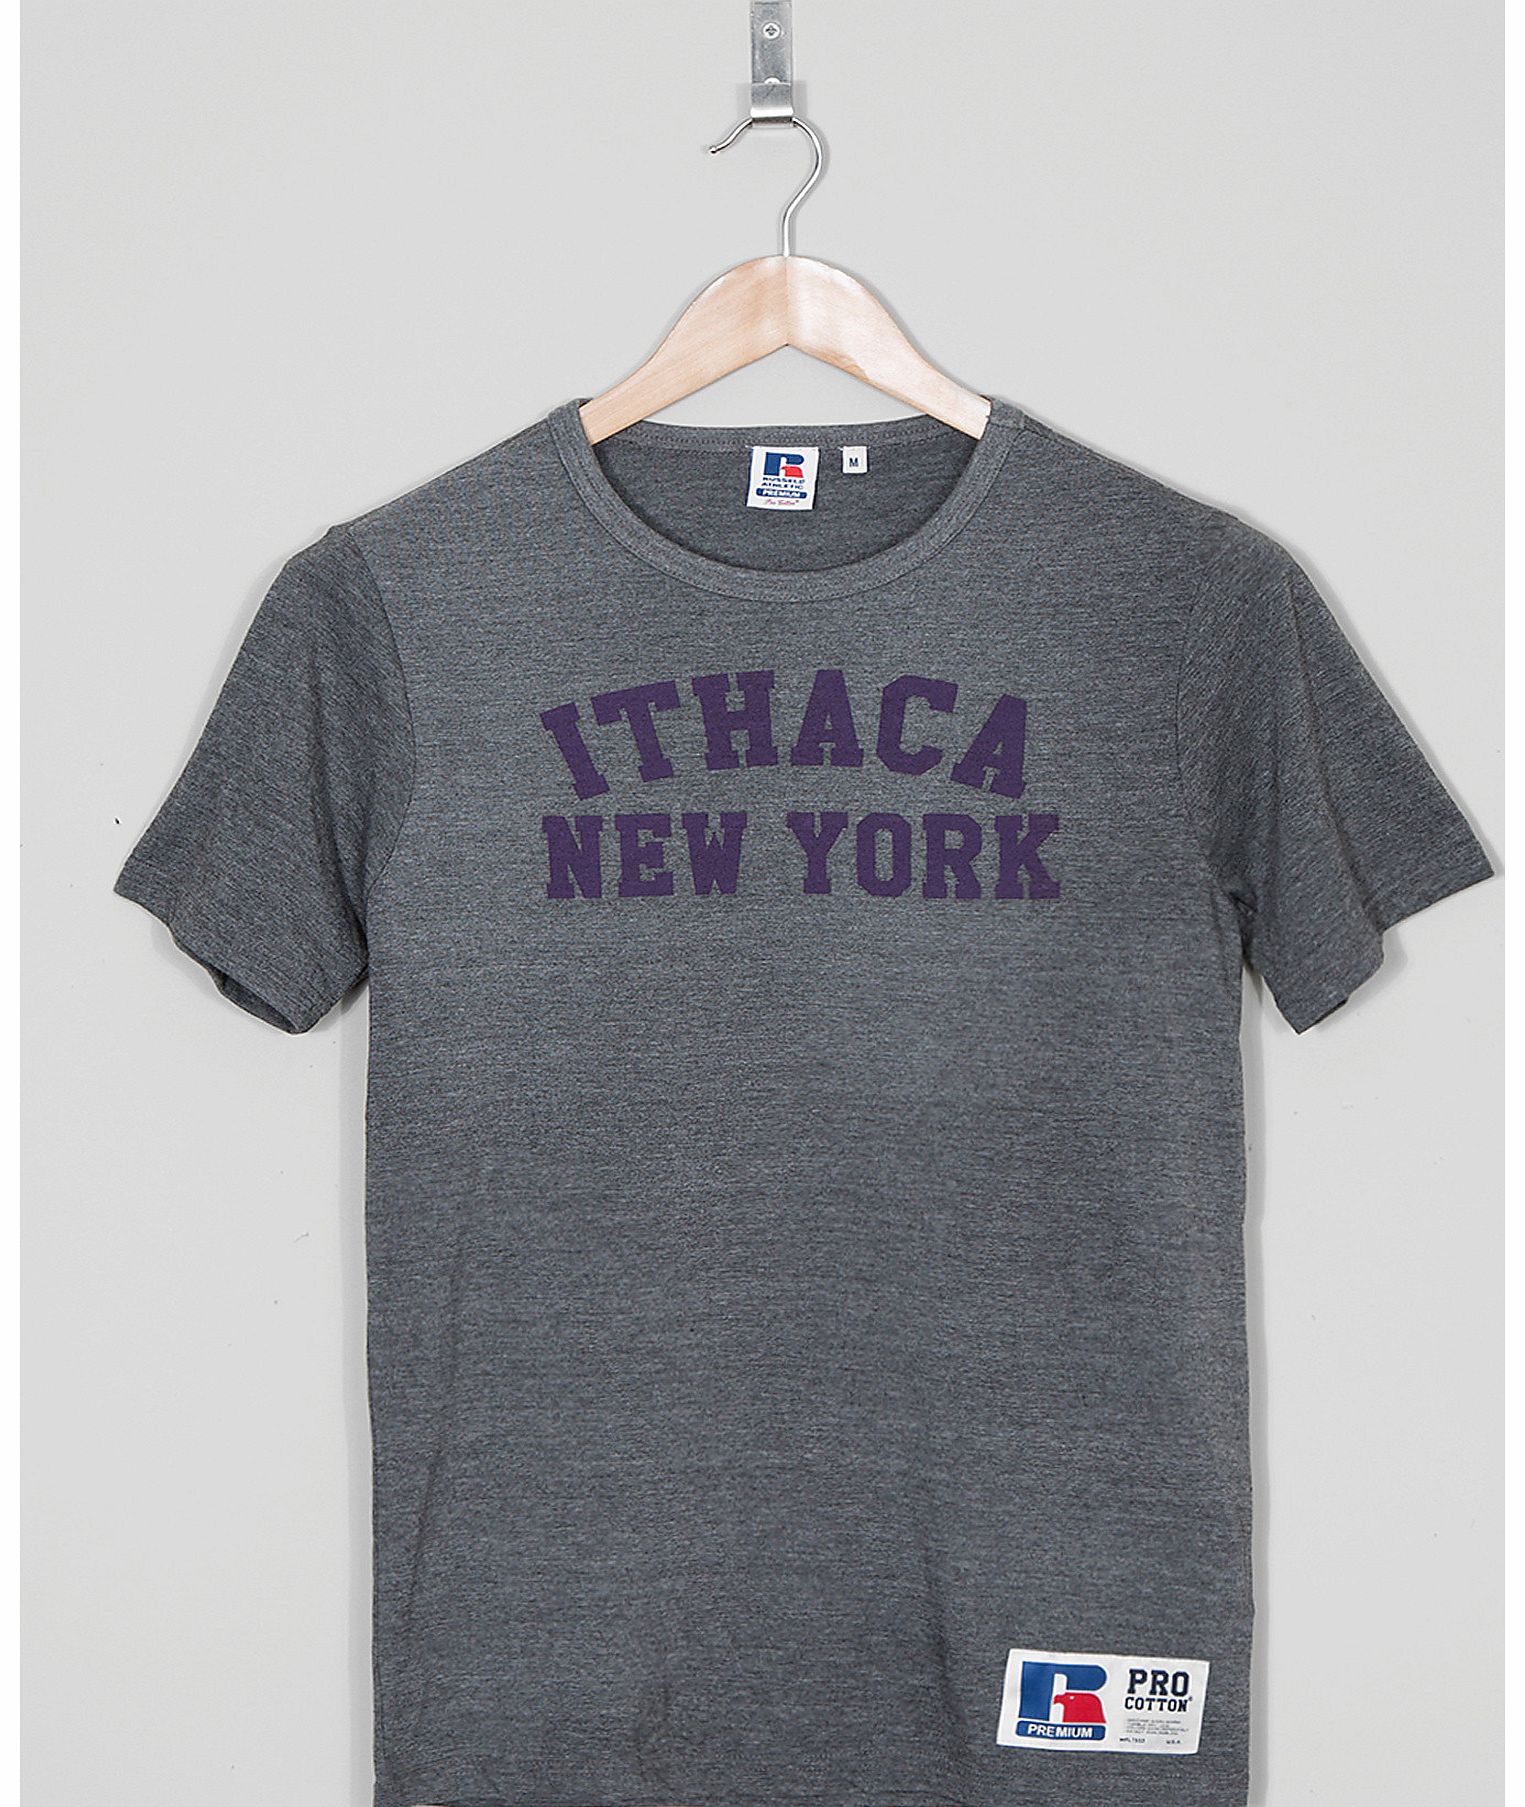 Ithaca New York T-Shirt